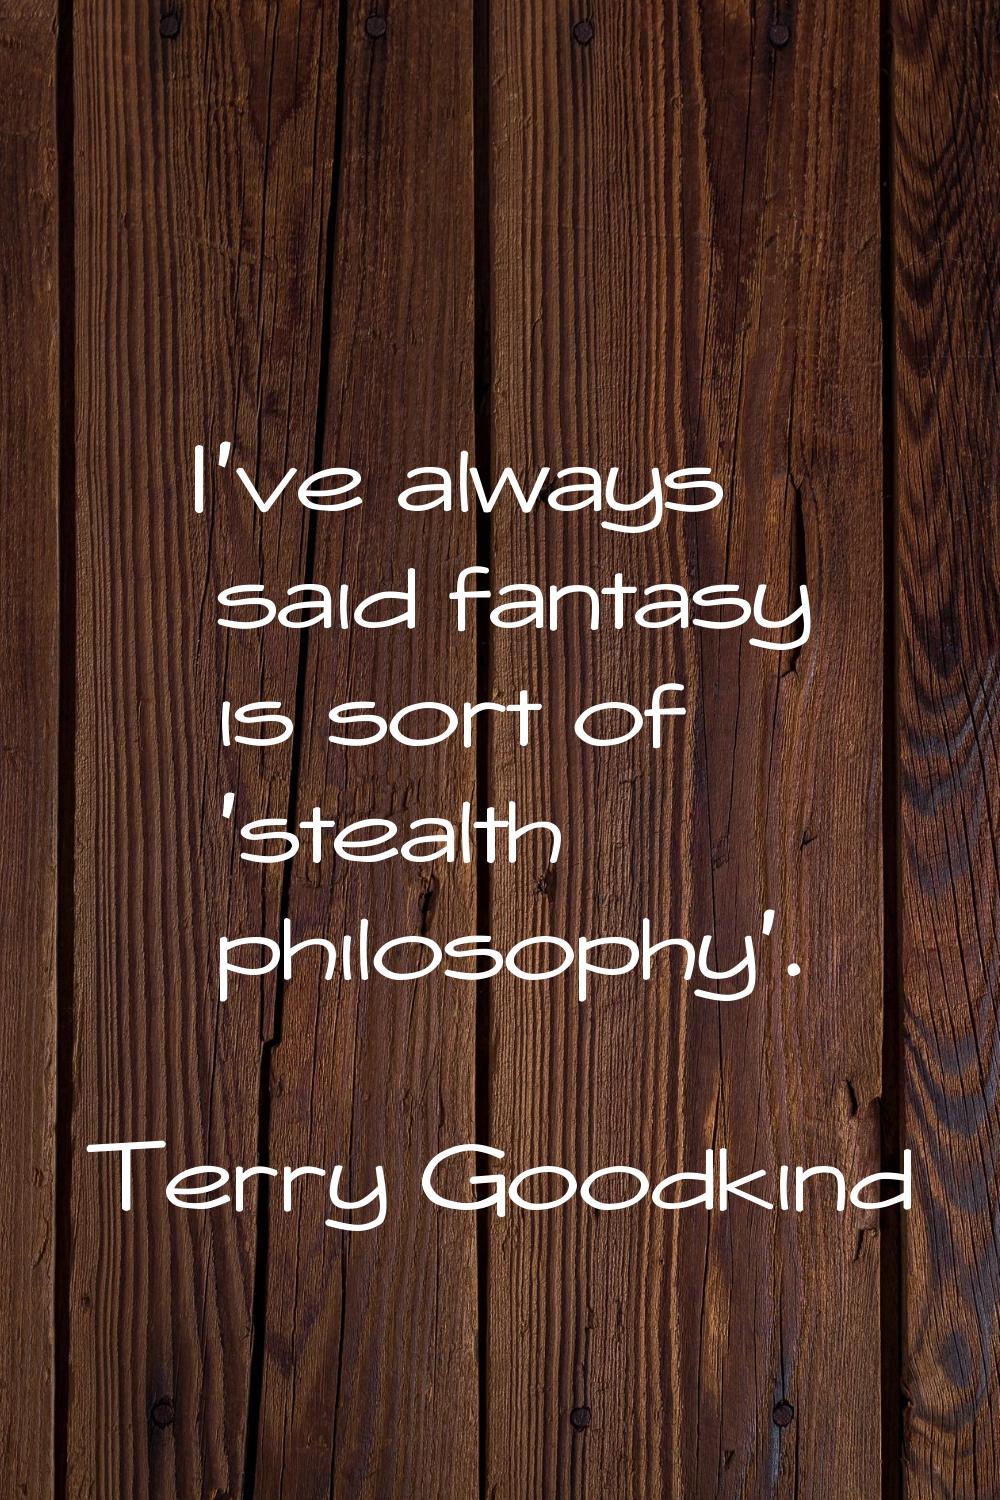 I've always said fantasy is sort of 'stealth philosophy'.